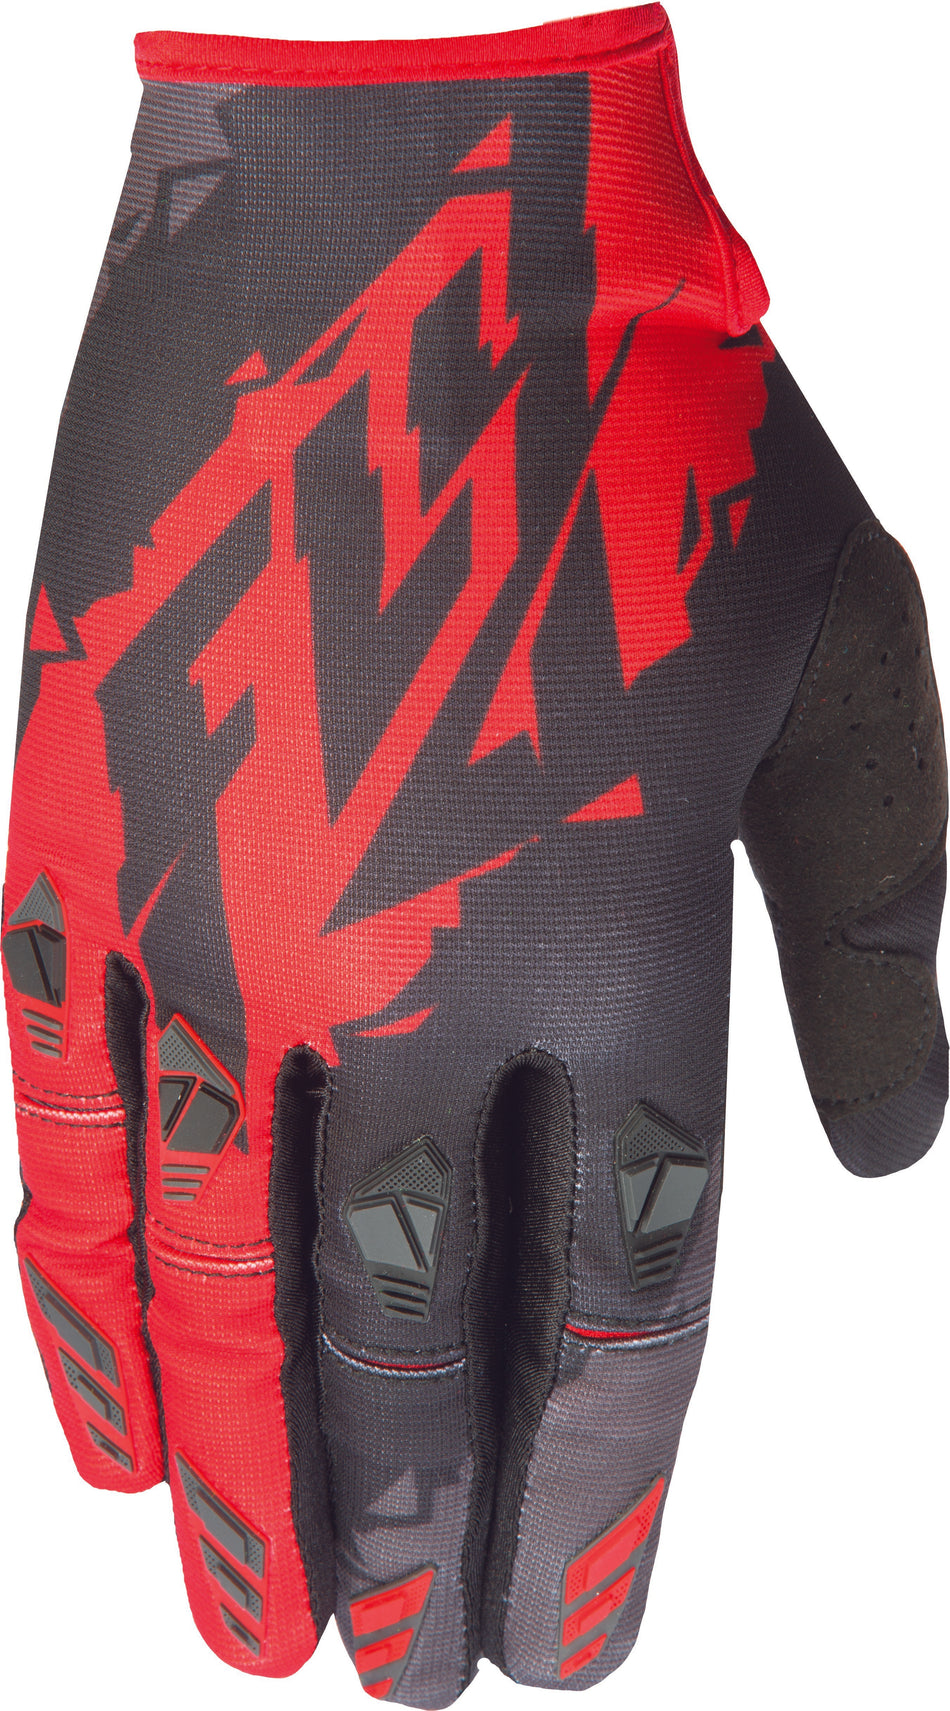 FLY RACING Kinetic Glove Black/Red Sz 11 X 370-41211